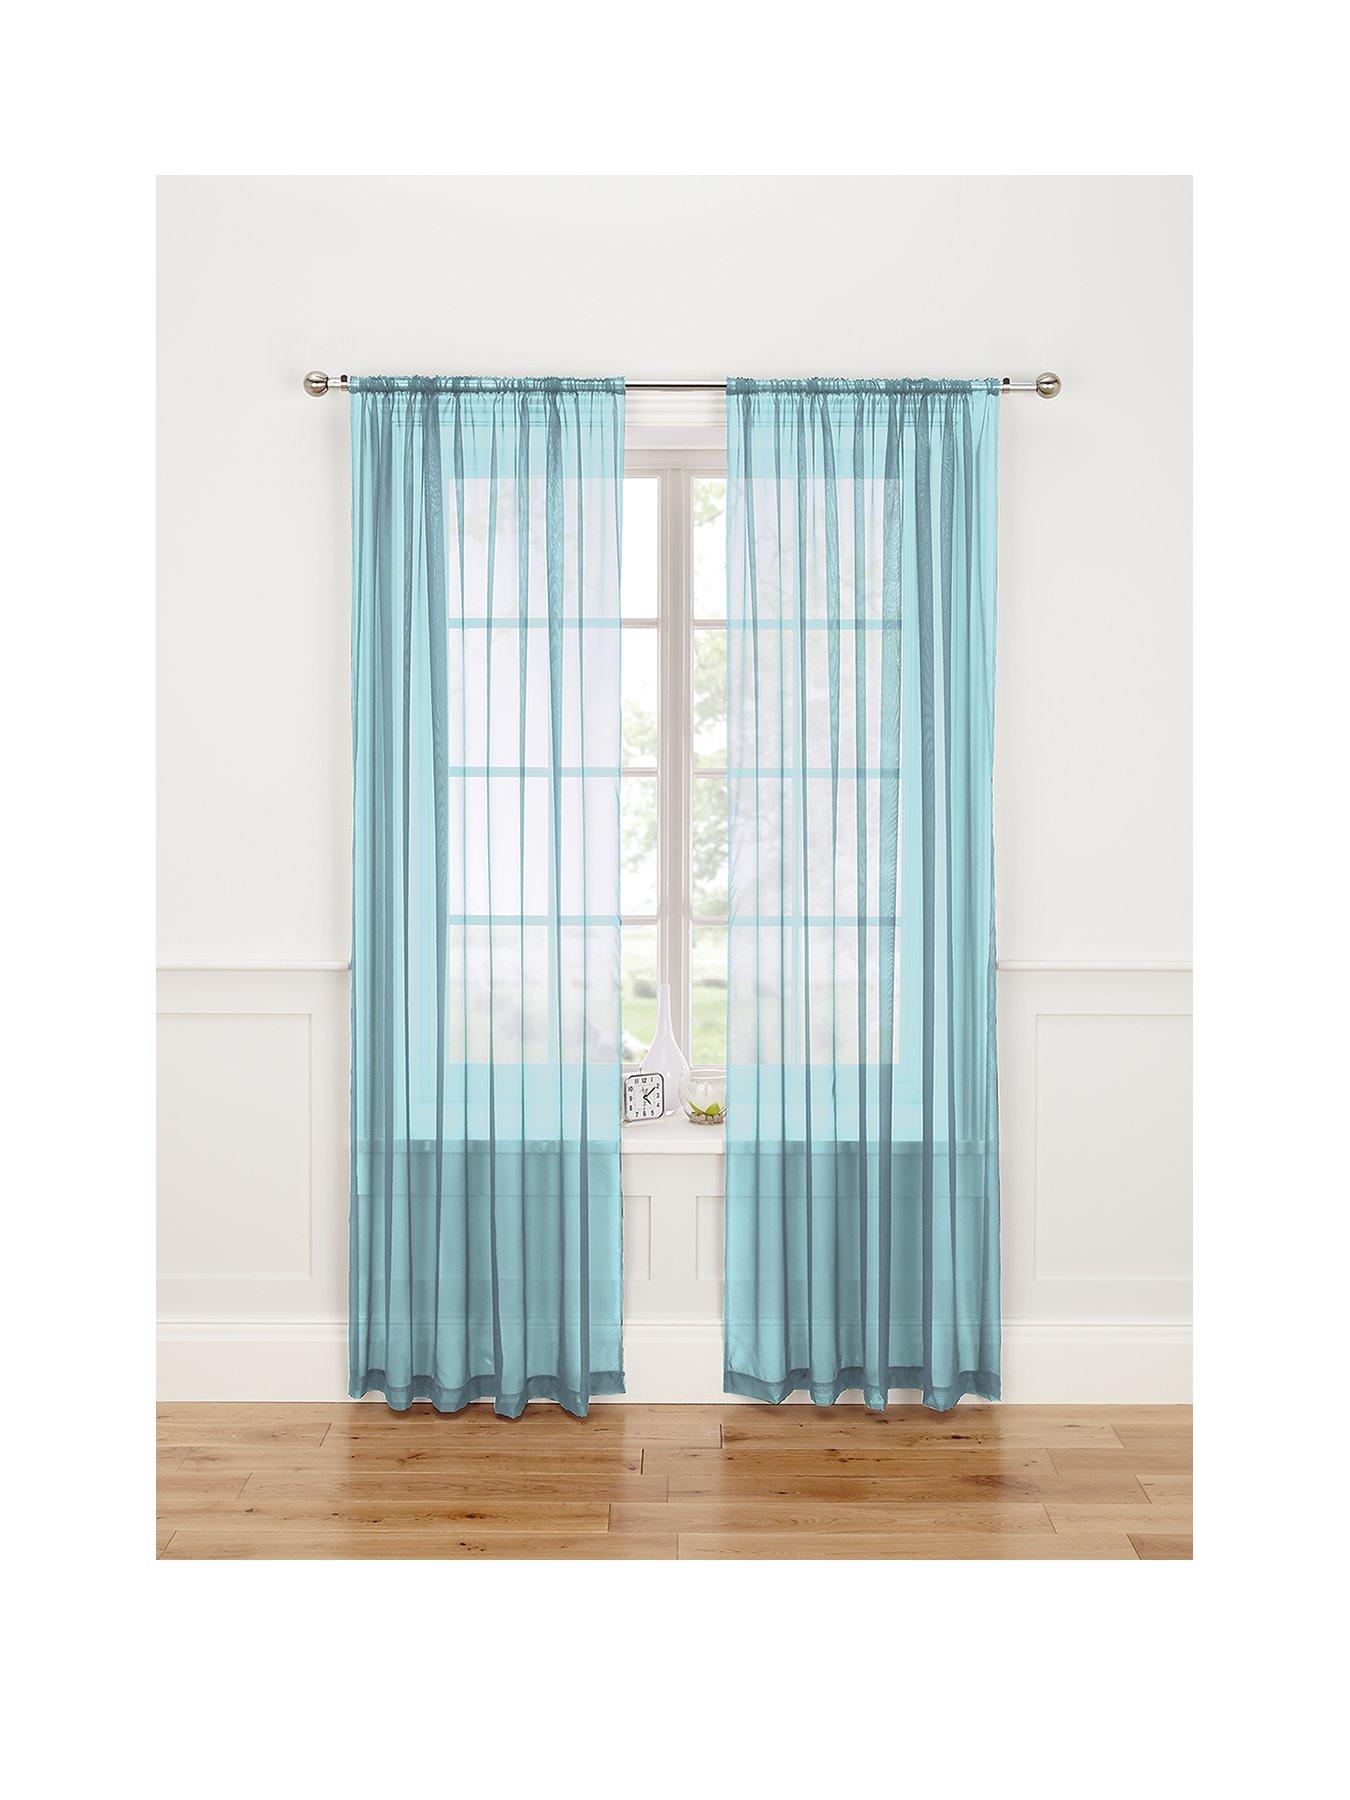 Intimates Riva Plain Woven Slot Top Voile Curtain Panel Cream, 59 W x 48 D